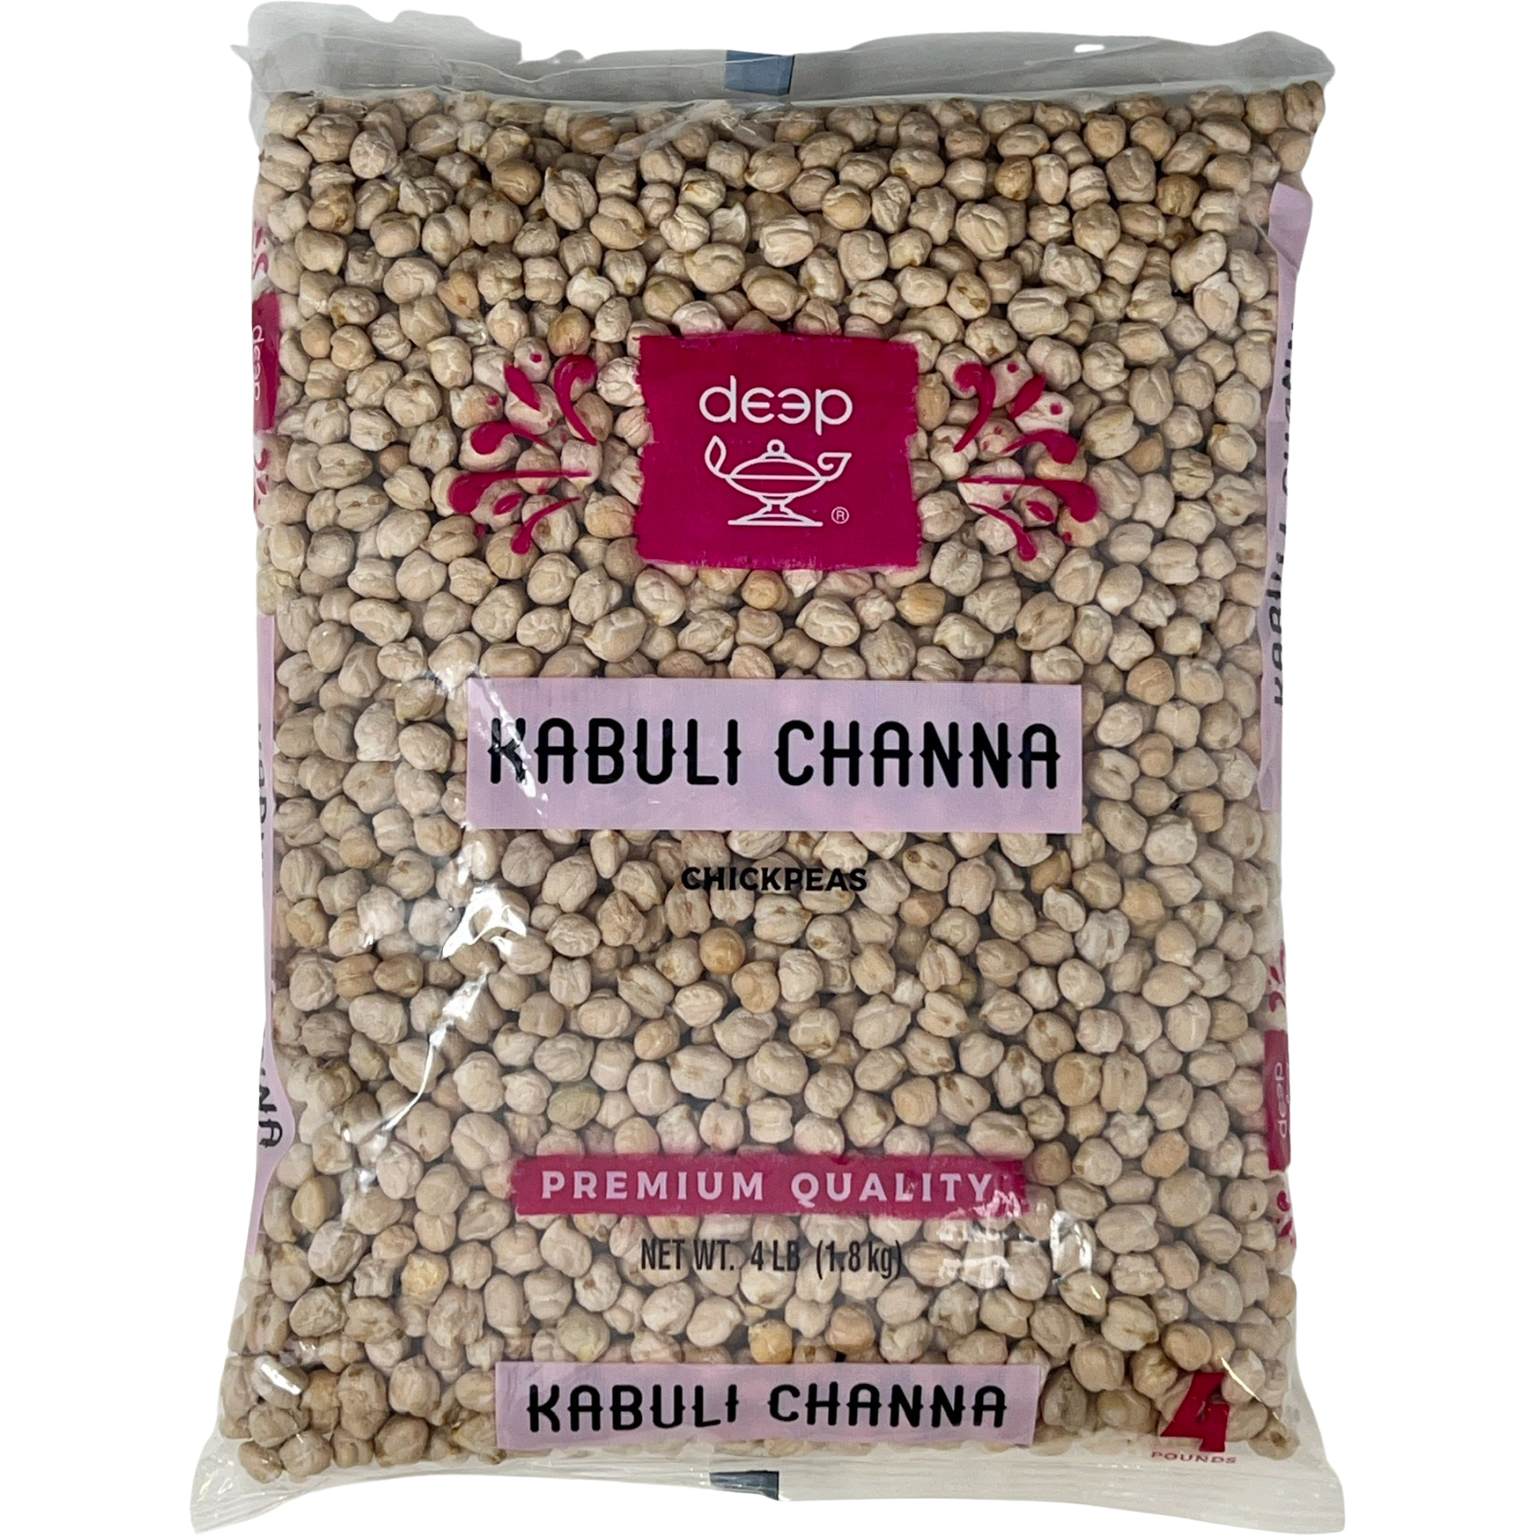 Deep Kabuli Chana Chickpeas - 1.8 Kg (4 Lb)